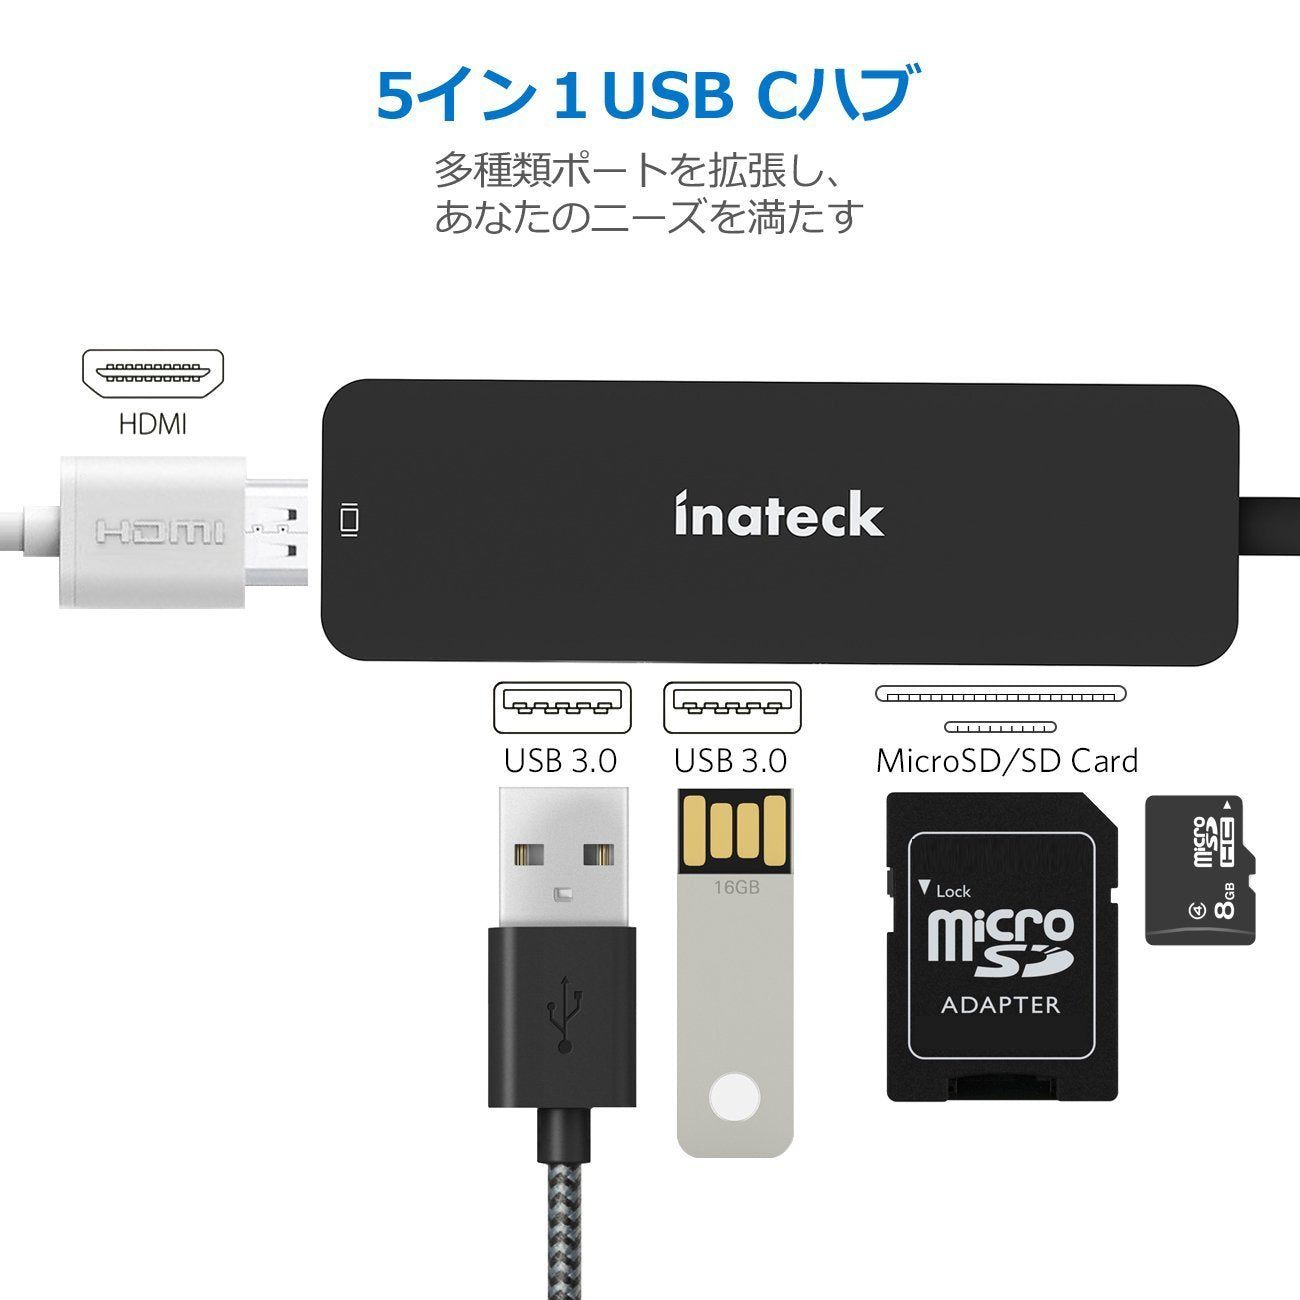 Inateck アルミ製 USB3.1 Gen1タイプCハブ/アダプタ，ブラック，TCH4001 - Inateckバックパックジャパン